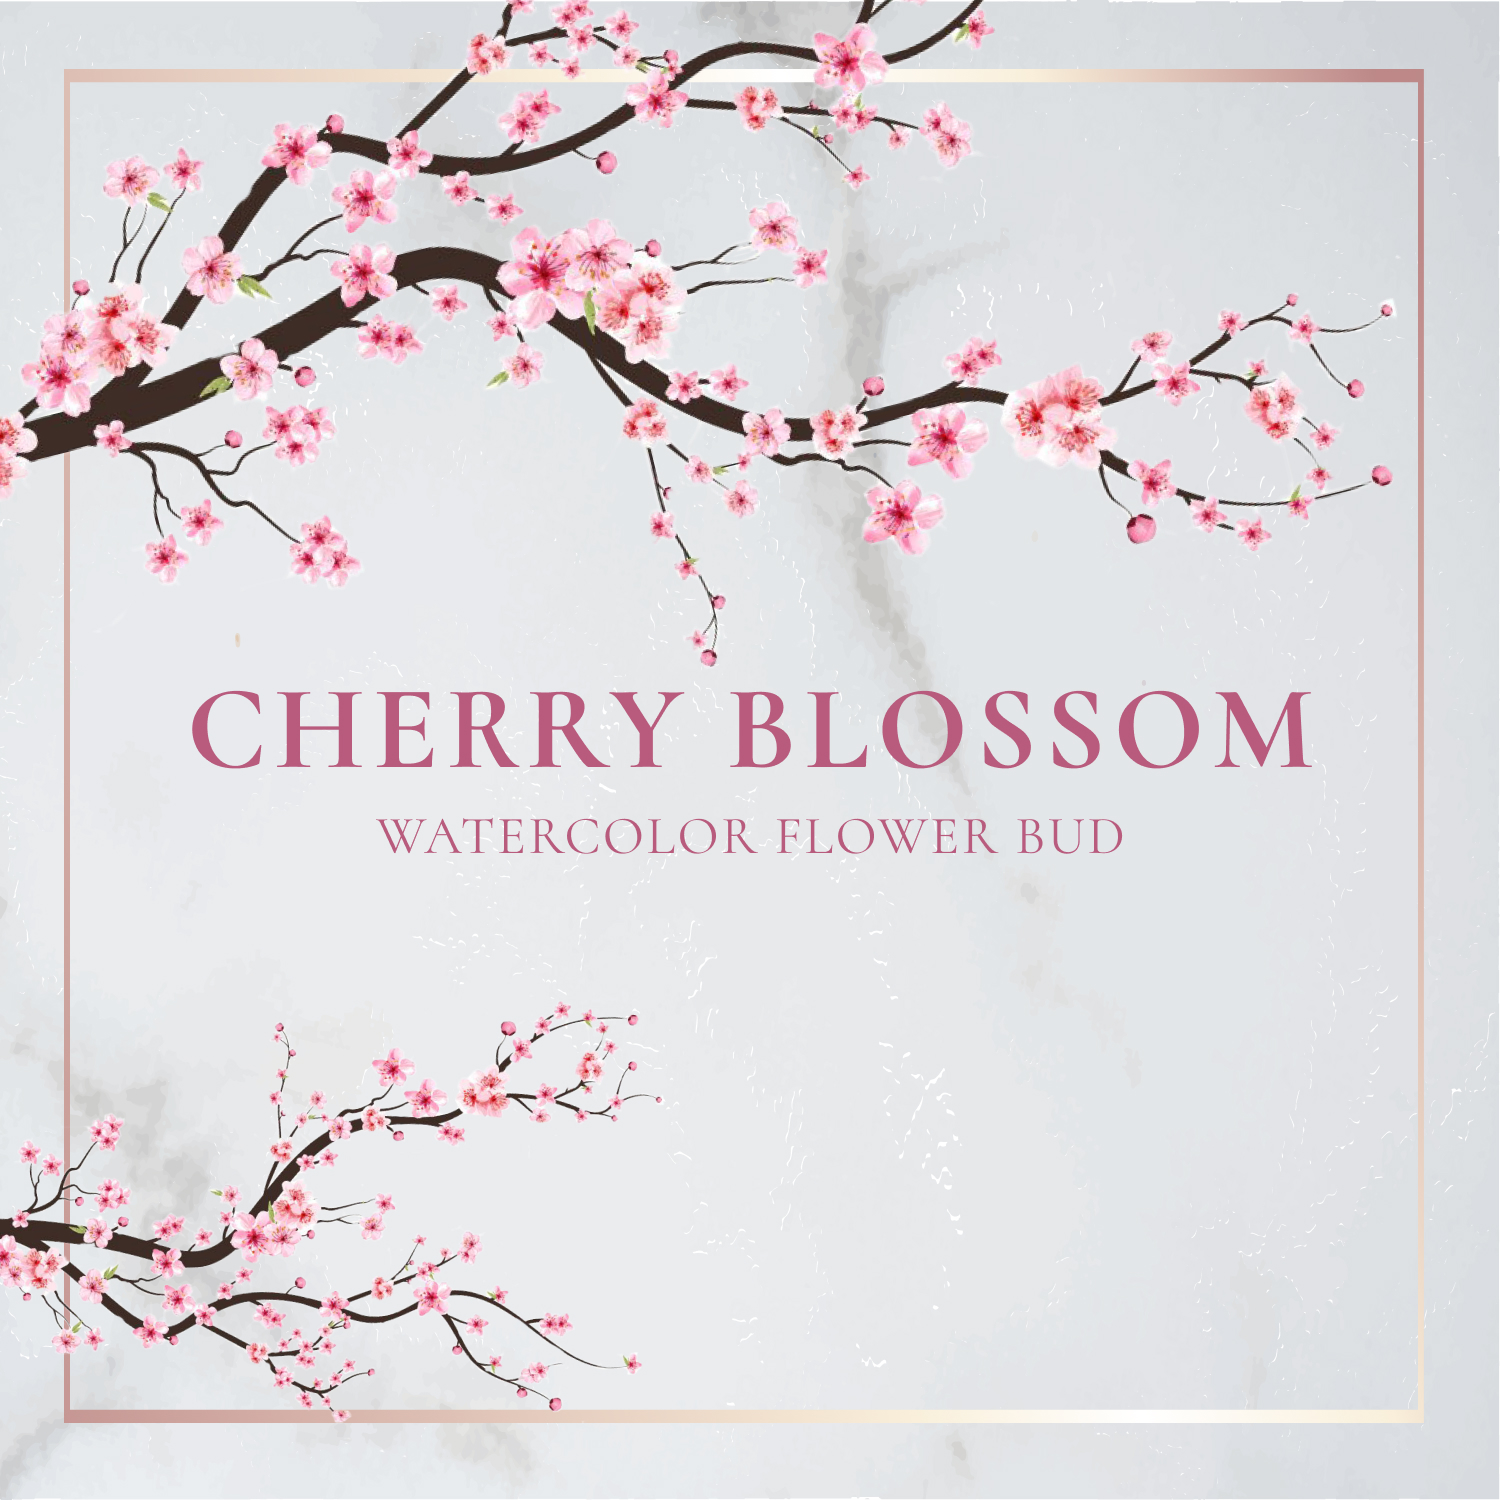 Cherry Blossom Watercolor Flower Bud.